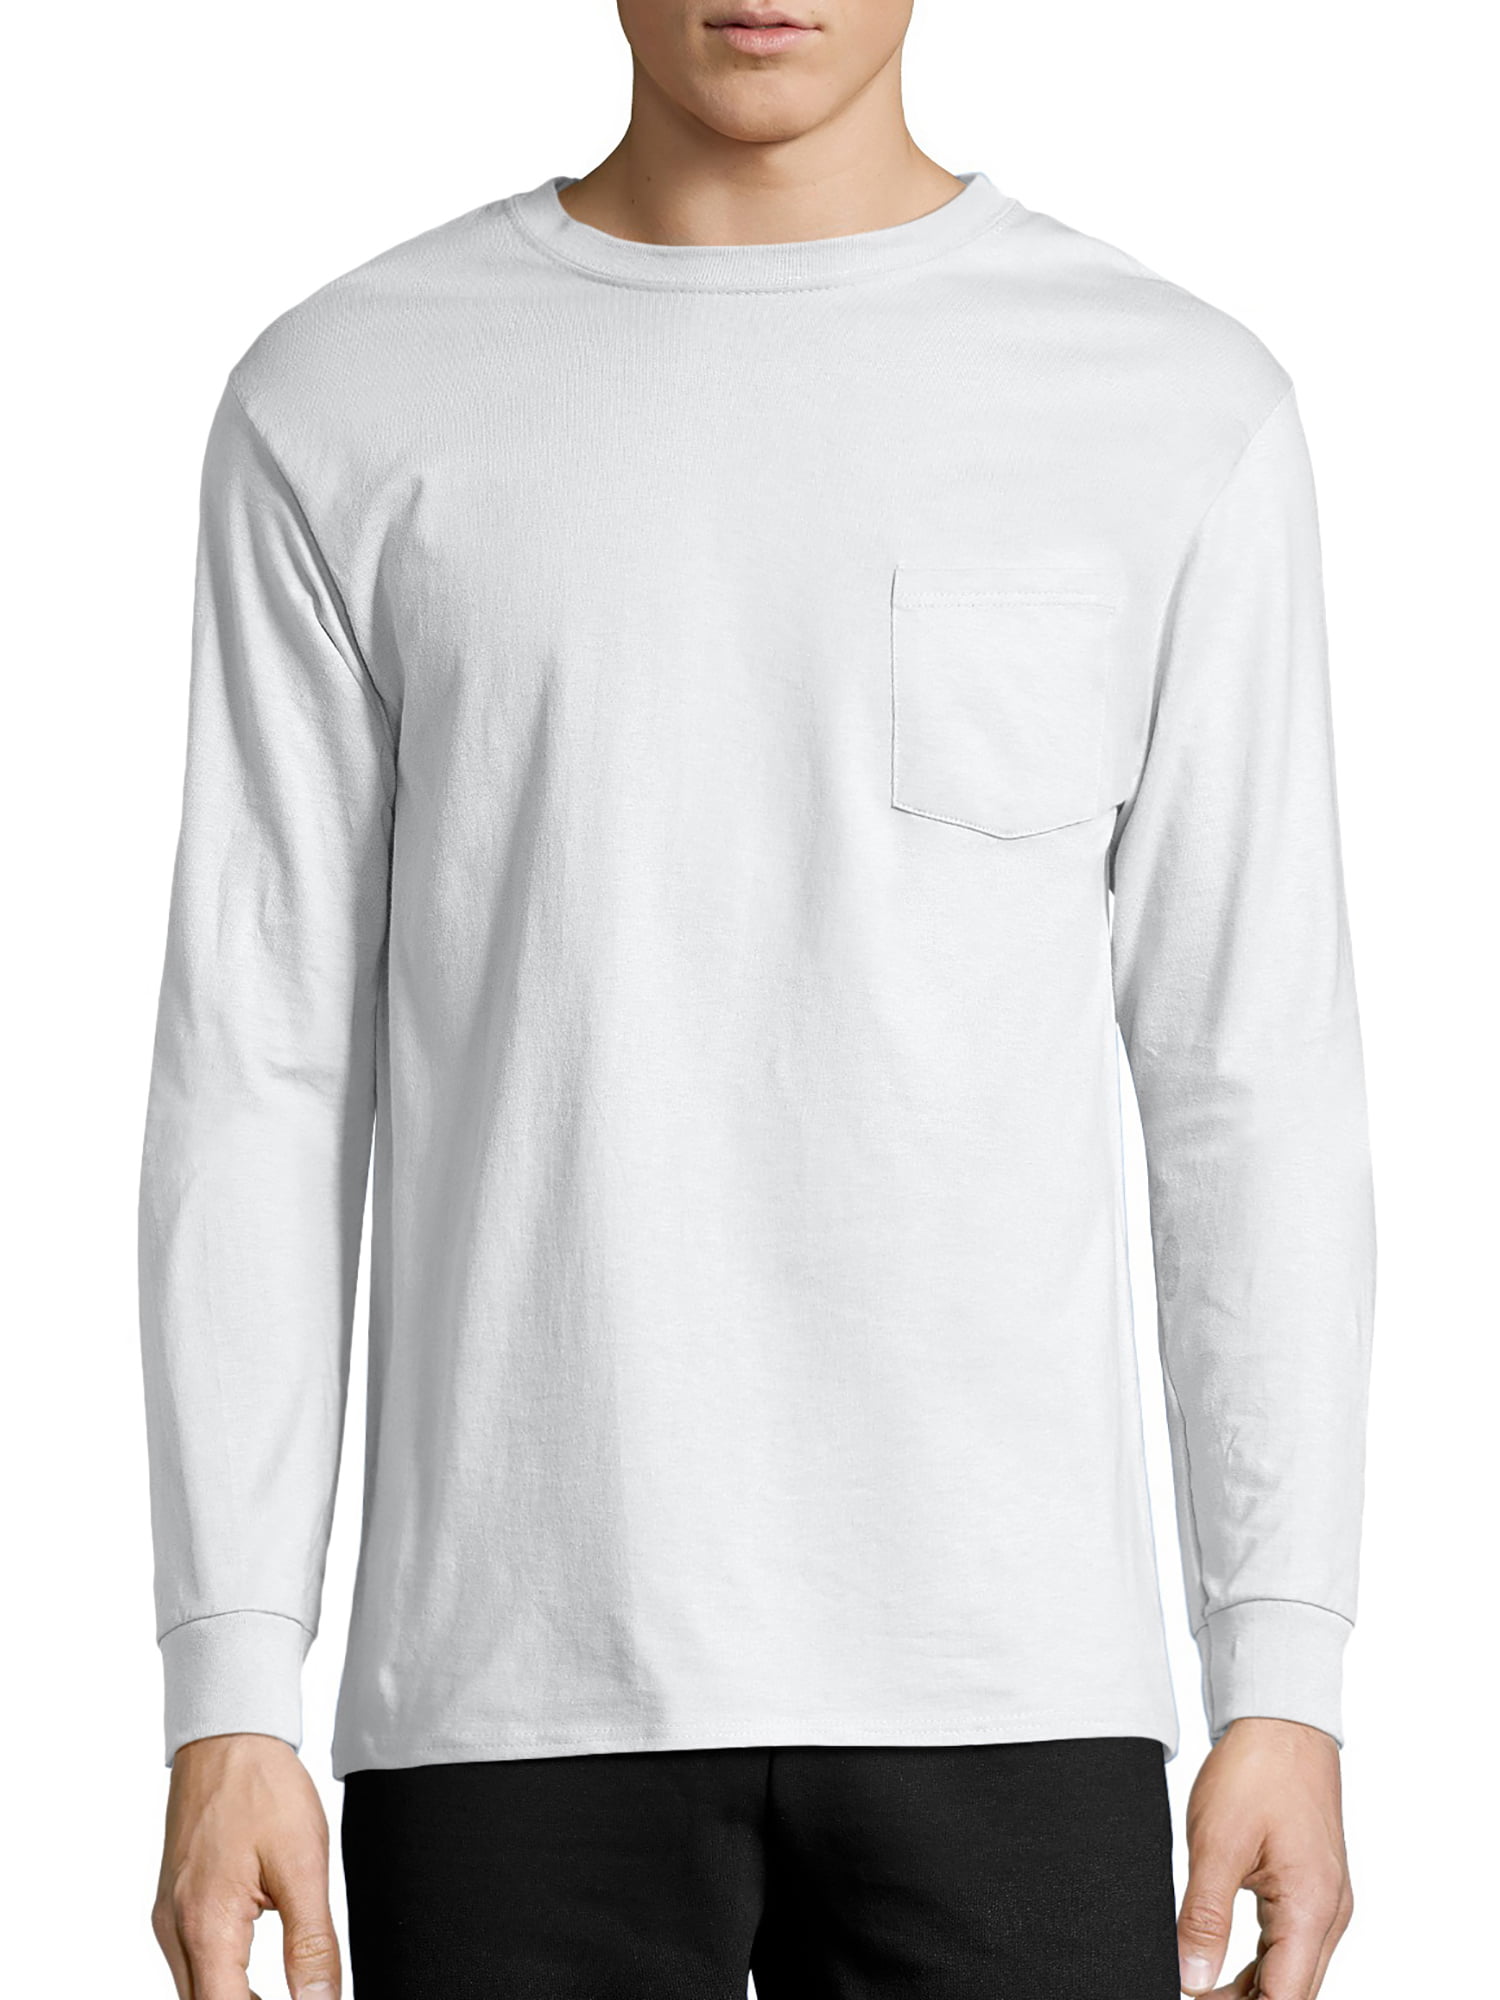 Hanes - Hanes Men's Authentic Long Sleeve Pocket Tee - Walmart.com ... Tall Long Sleeve T Shirts Mens